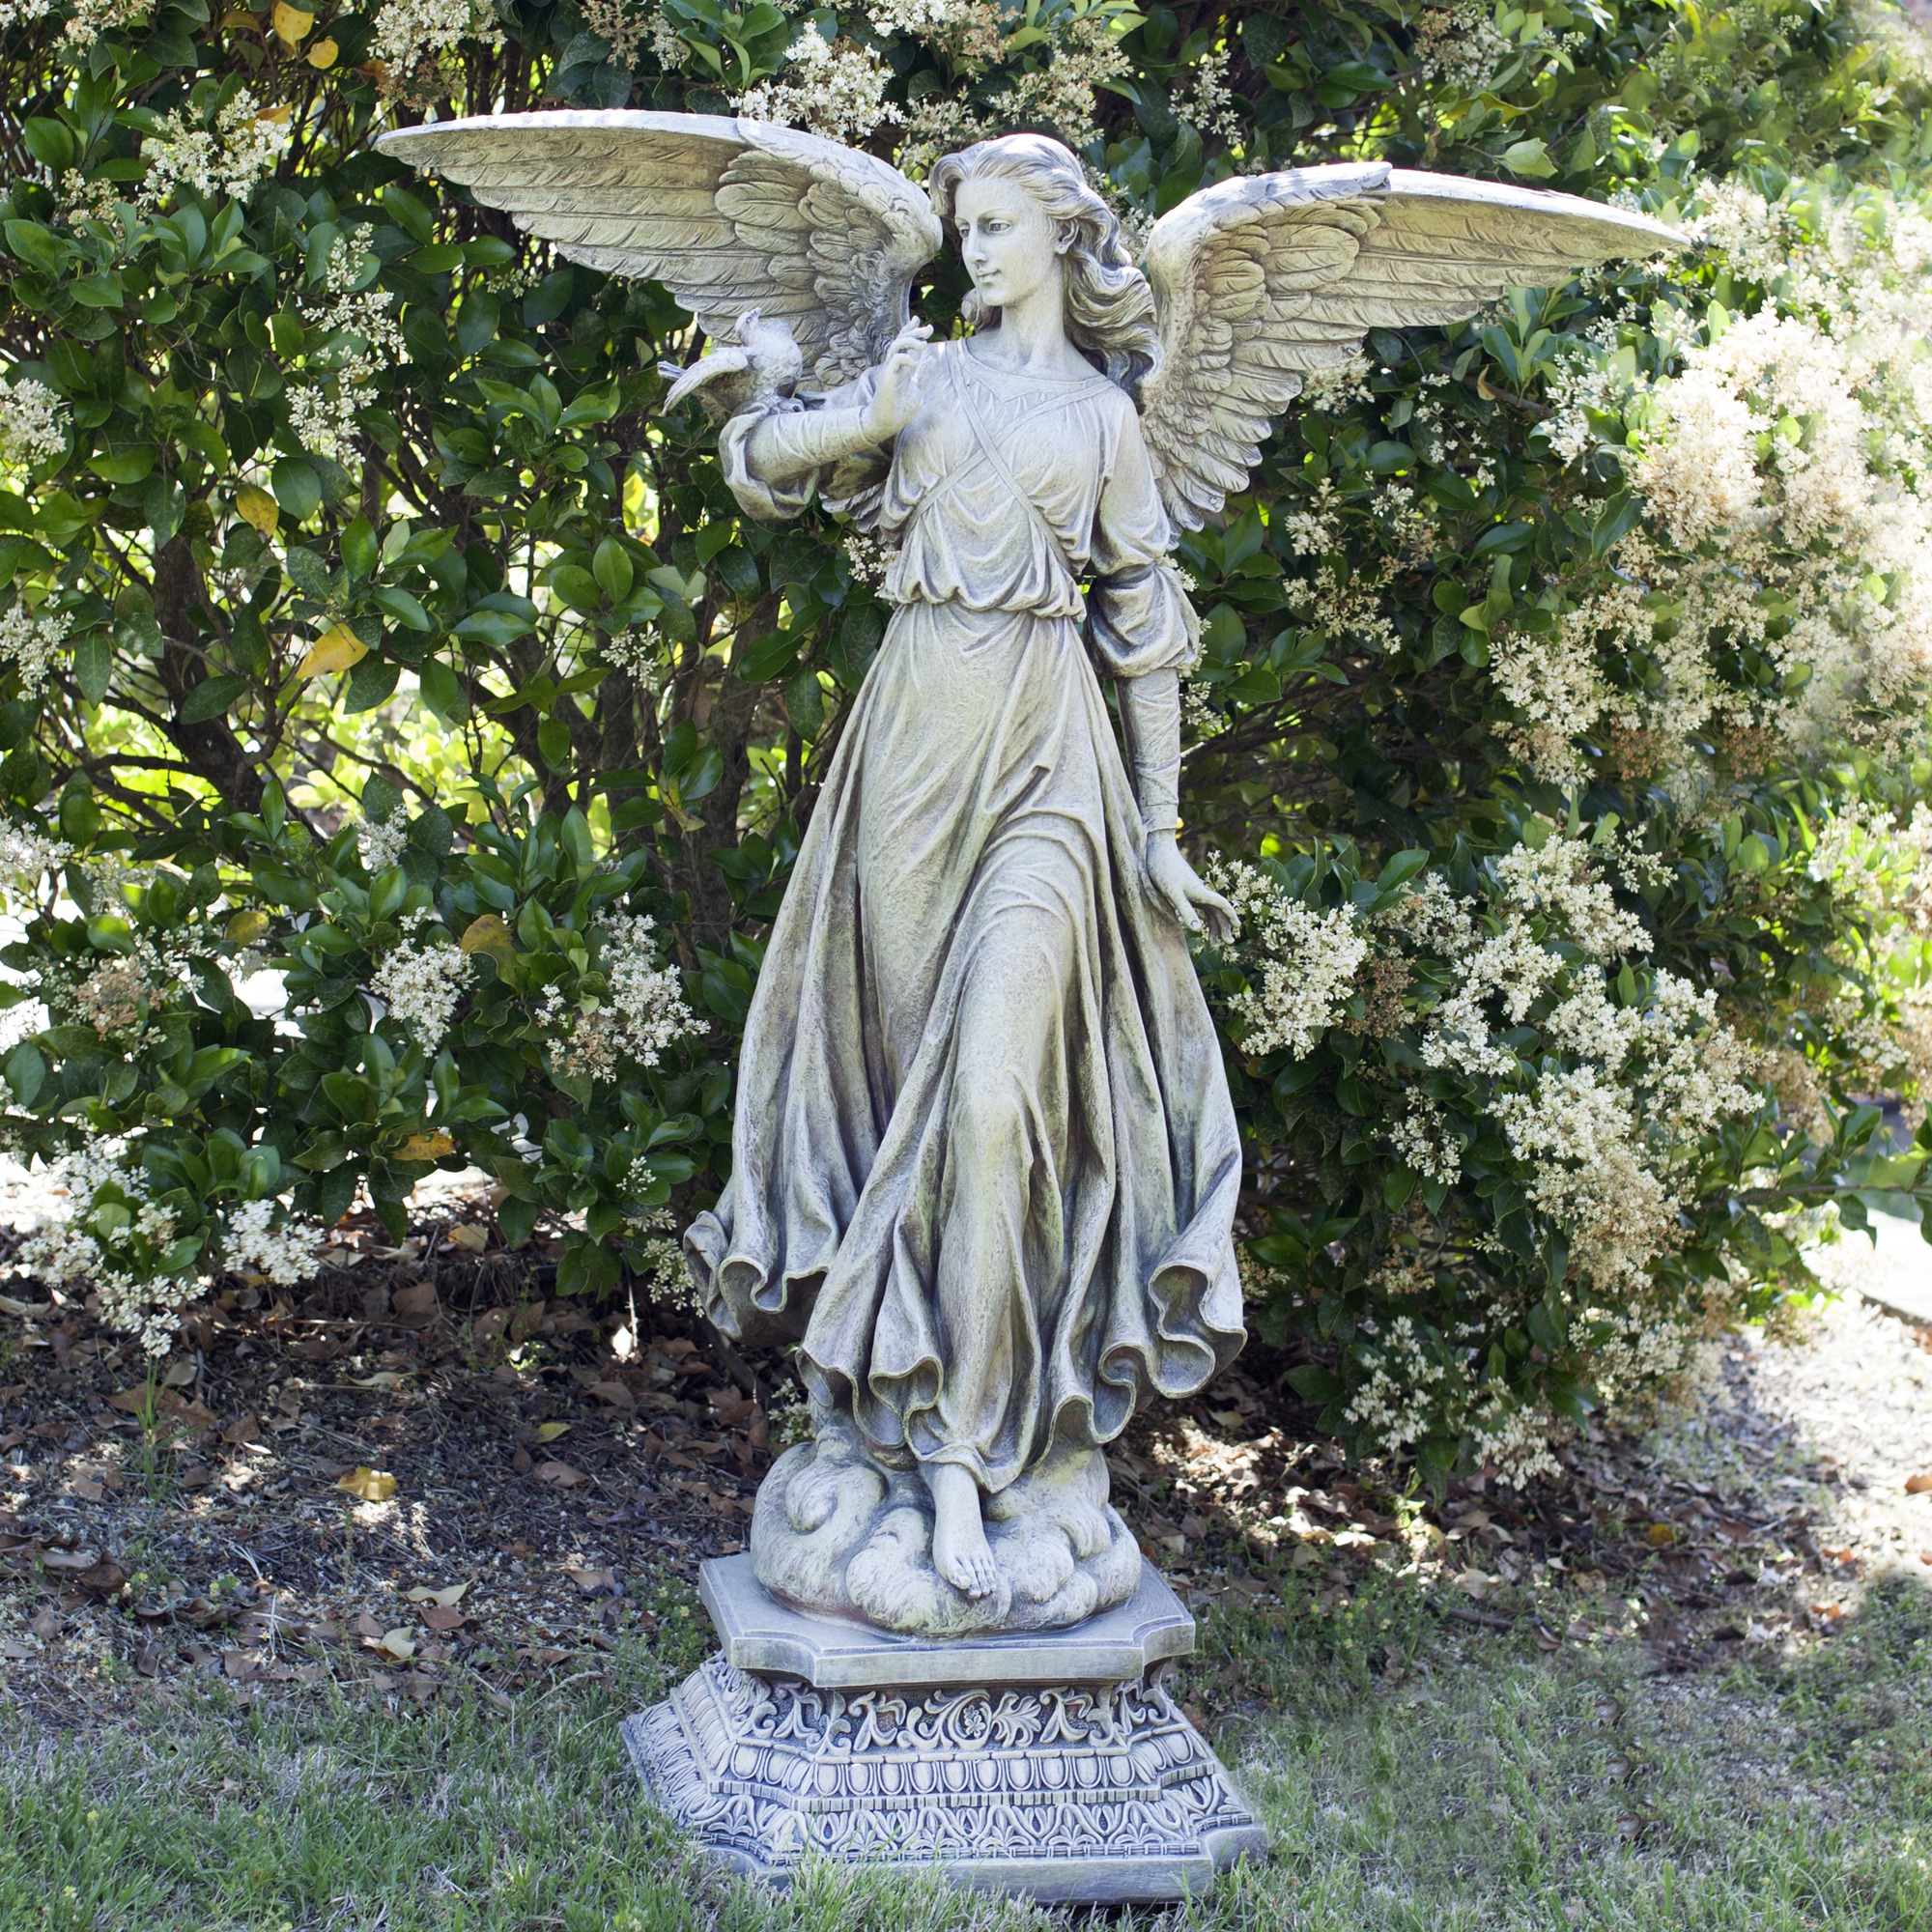 Garden Angel Figure - 46.5 inches | The Catholic Company®